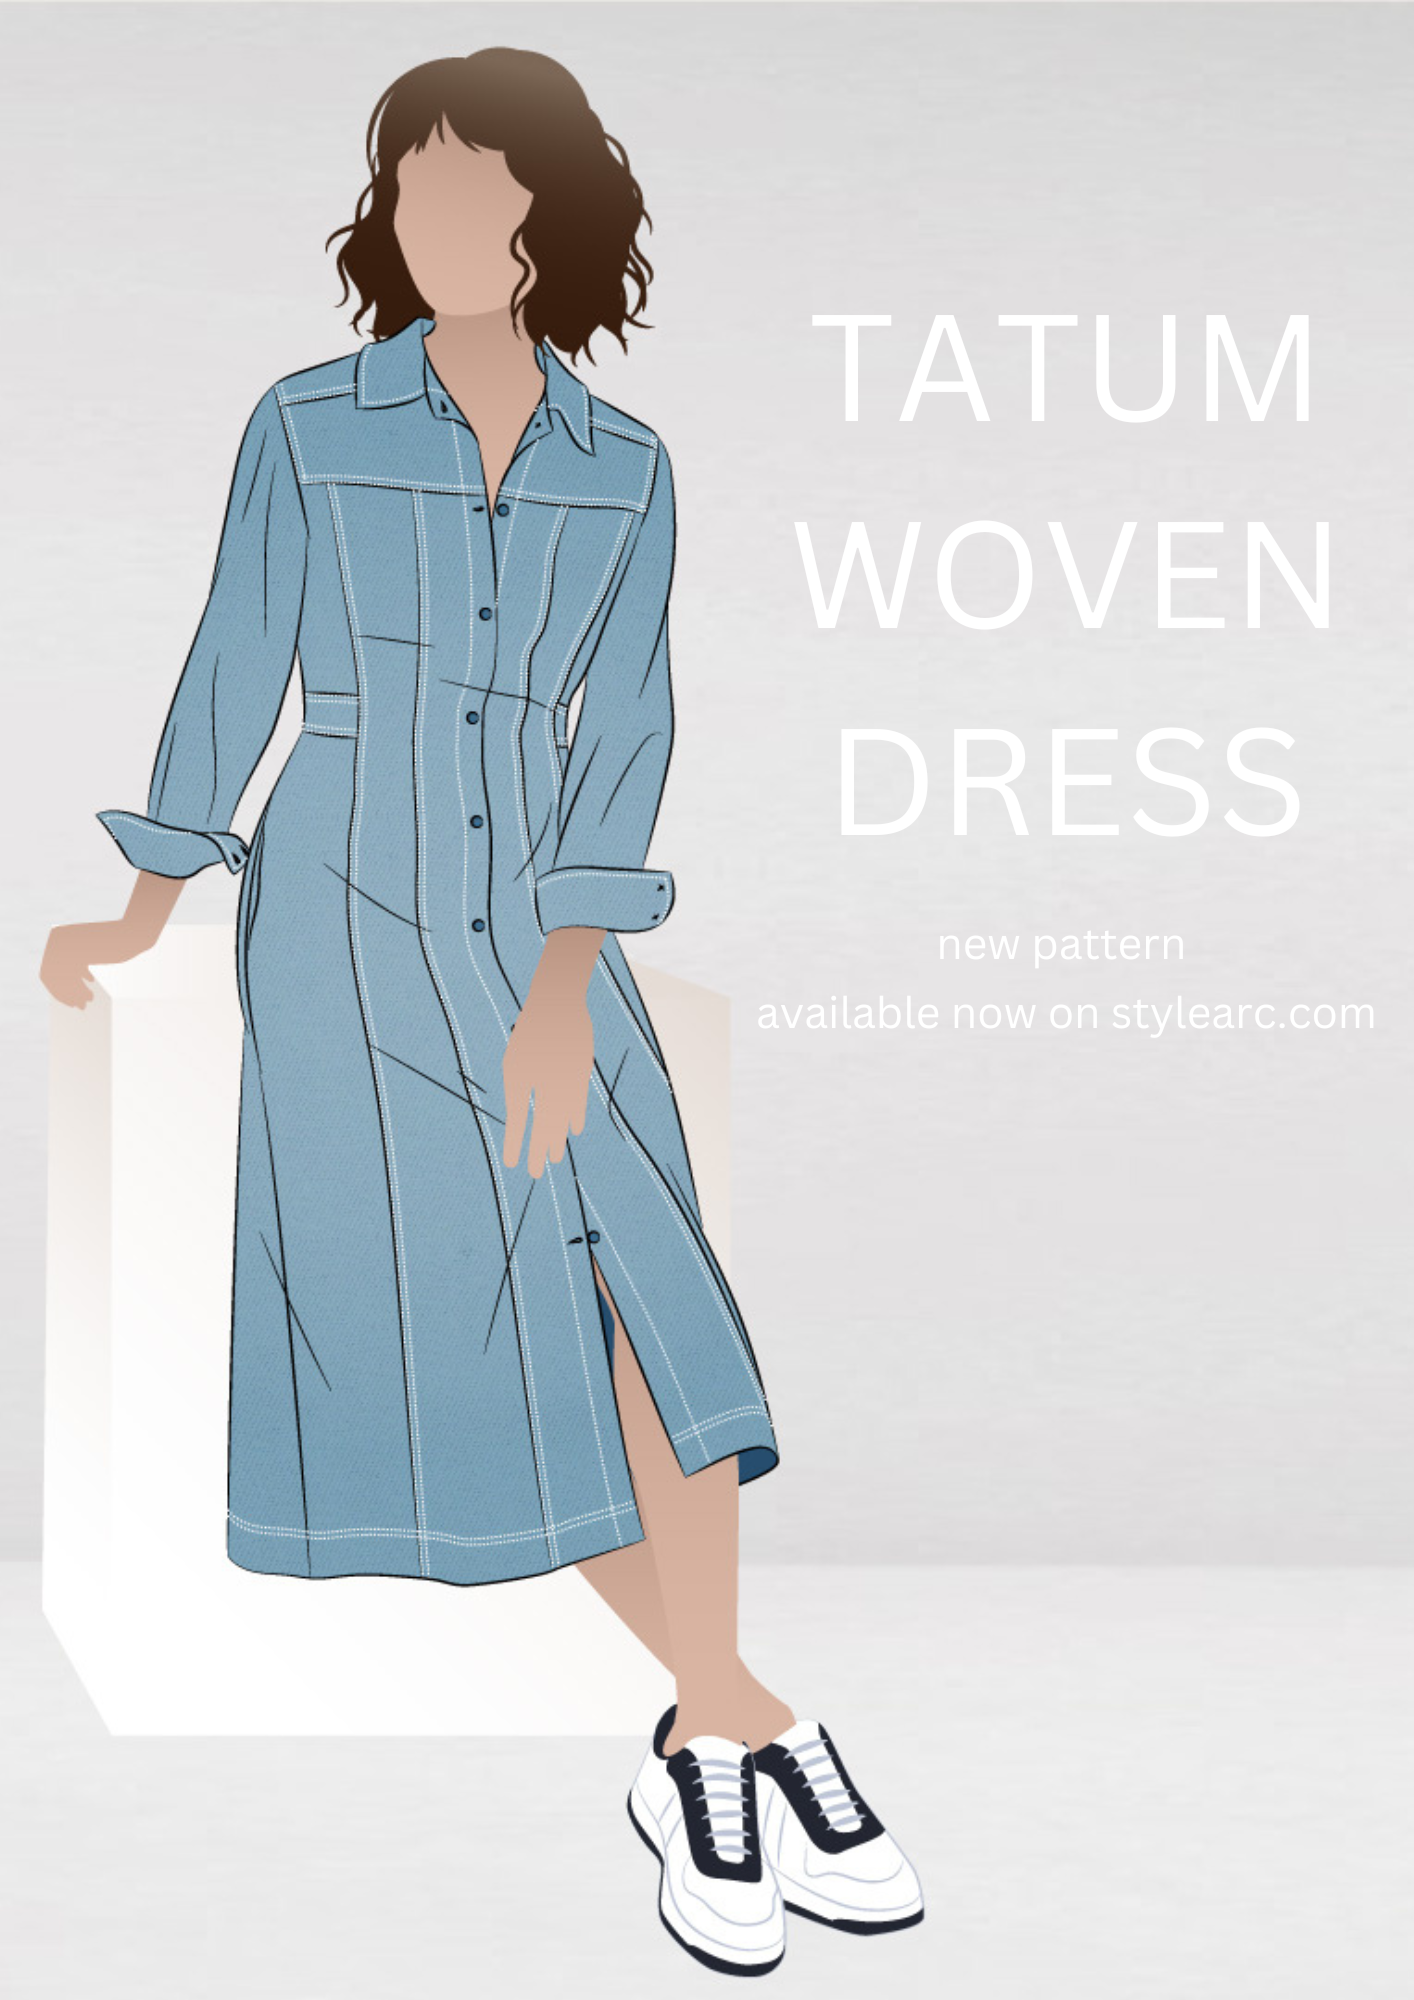 Tatum Woven Dress - New Pattern!